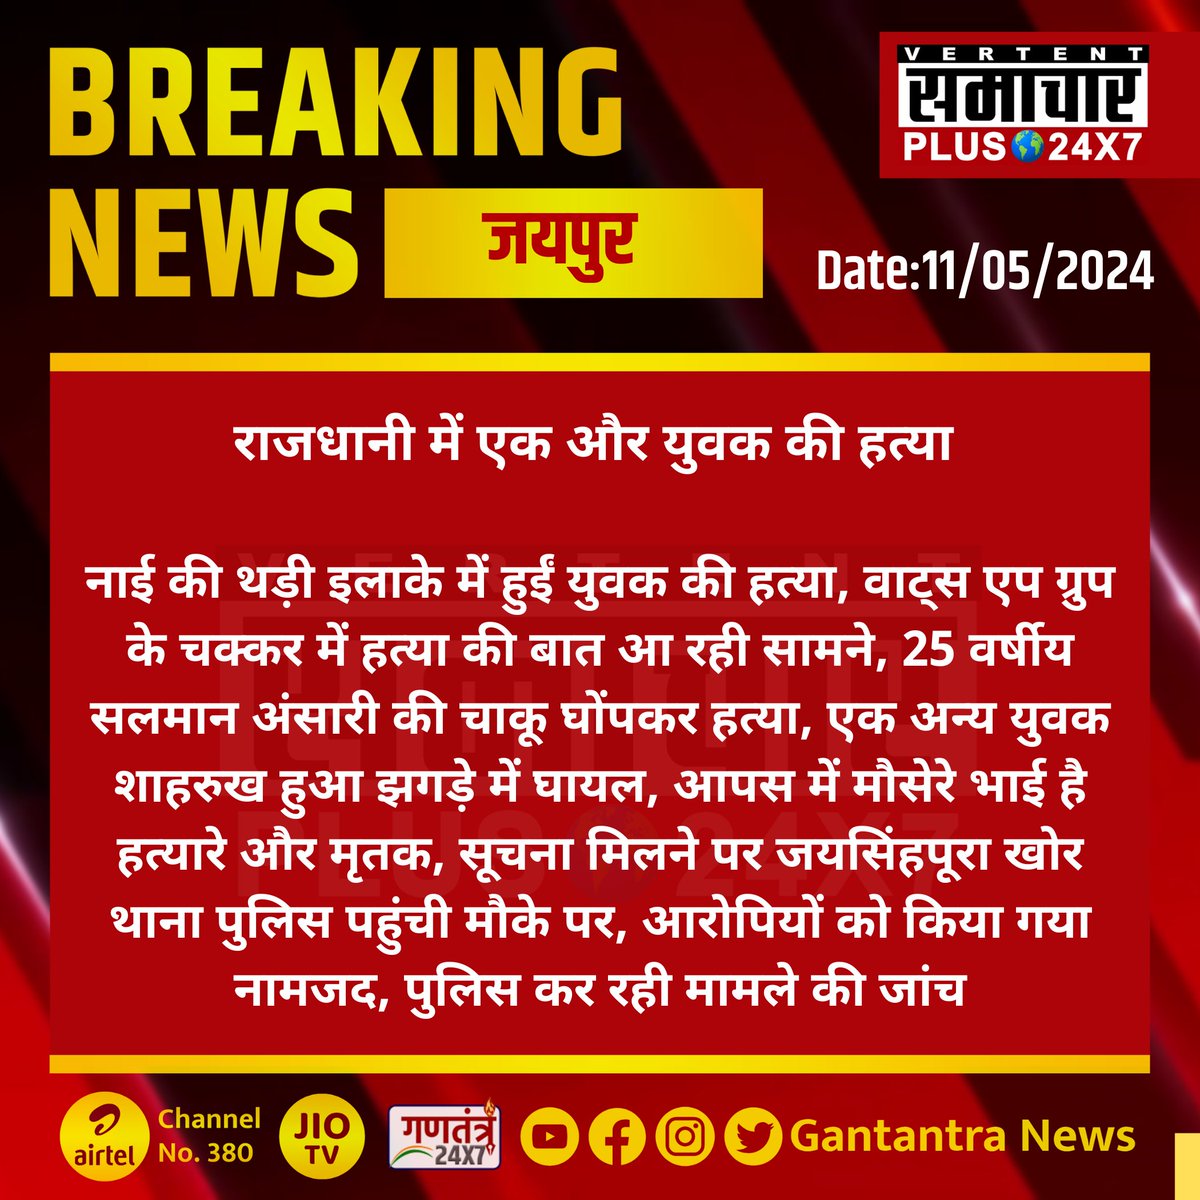 #जयपुर :राजधानी में एक और युवक की हत्या 

नाई की थड़ी इलाके में हुईं युवक की हत्या...

#Jaipur #RajasthanNews #BreakingNews‌ #LatestNews #SamacharPlus @jaipur_police @PoliceRajasthan